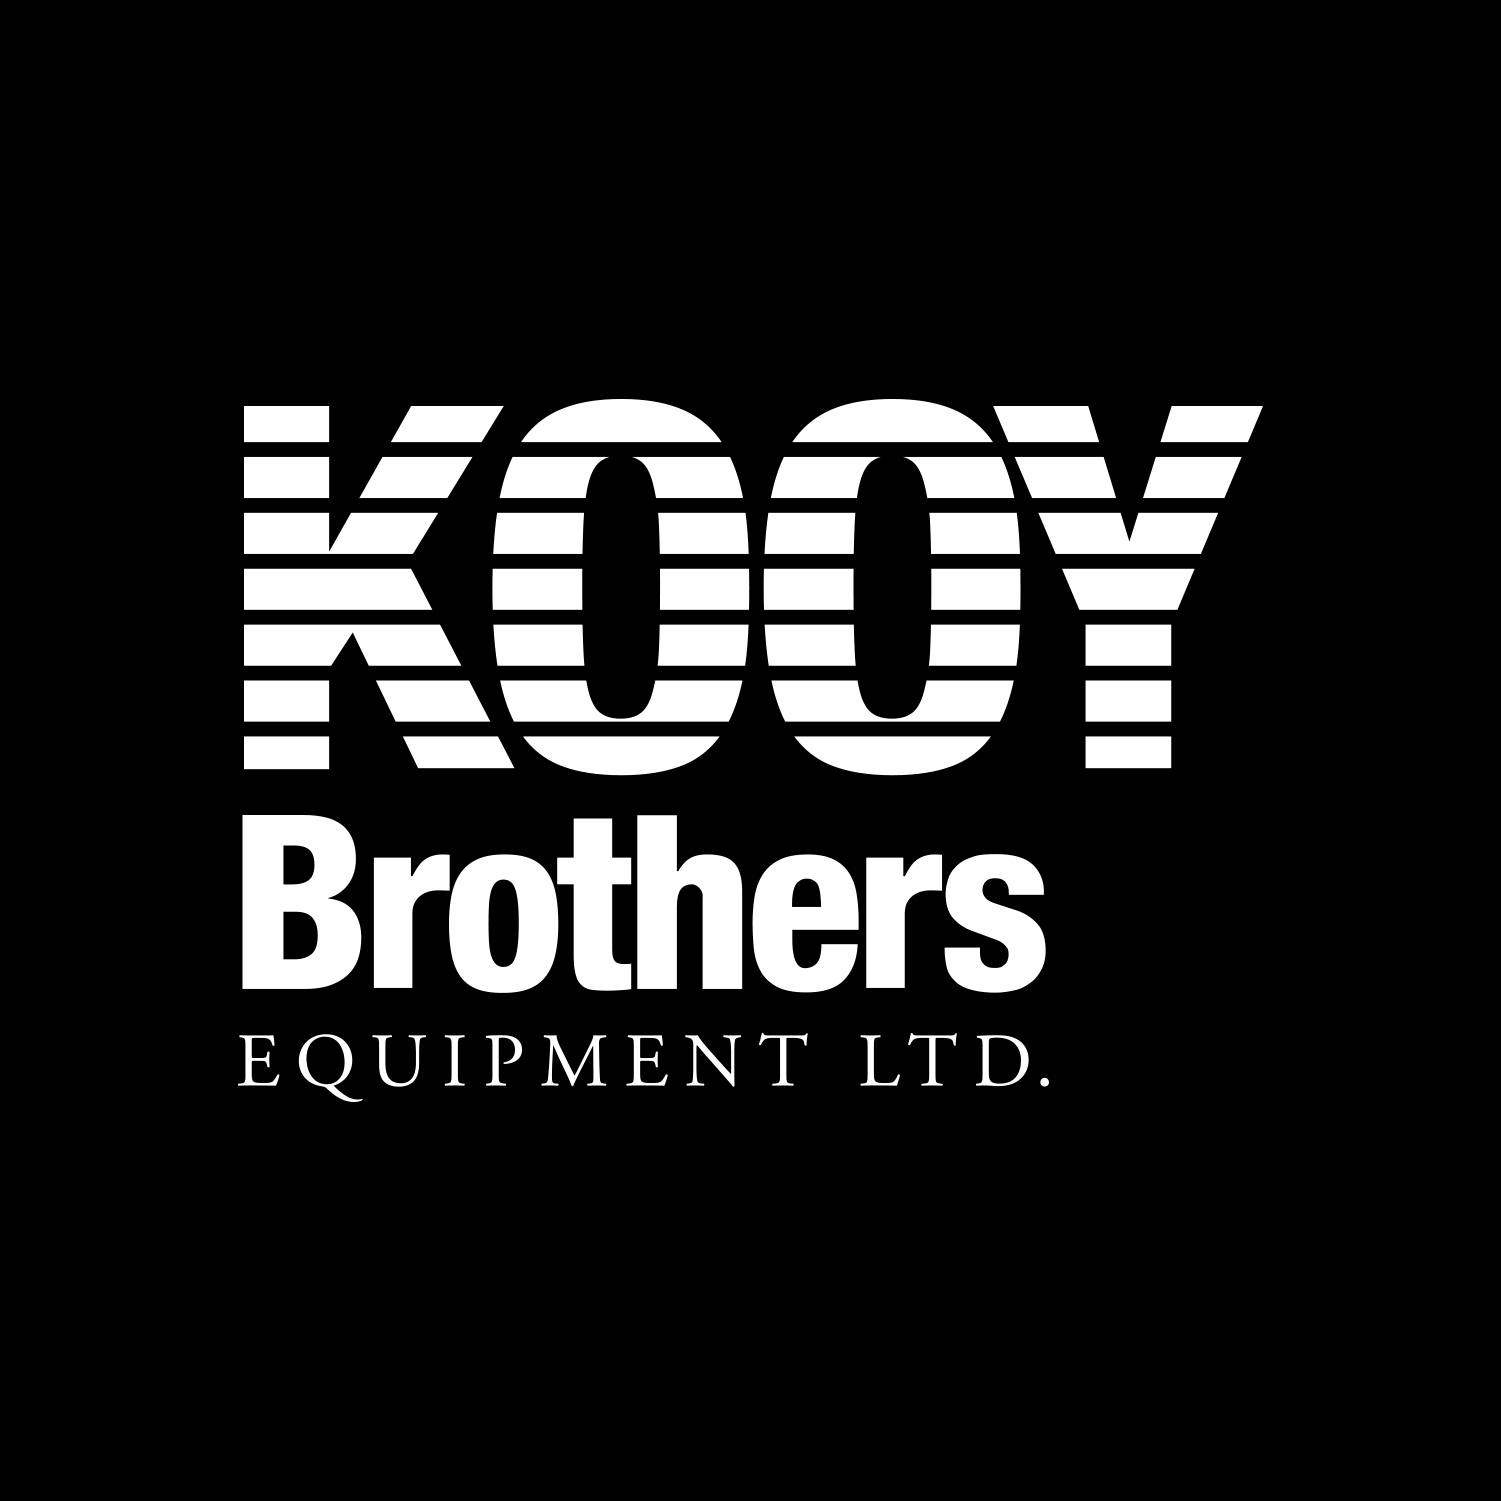 Kooy Brothers Equipment Ltd